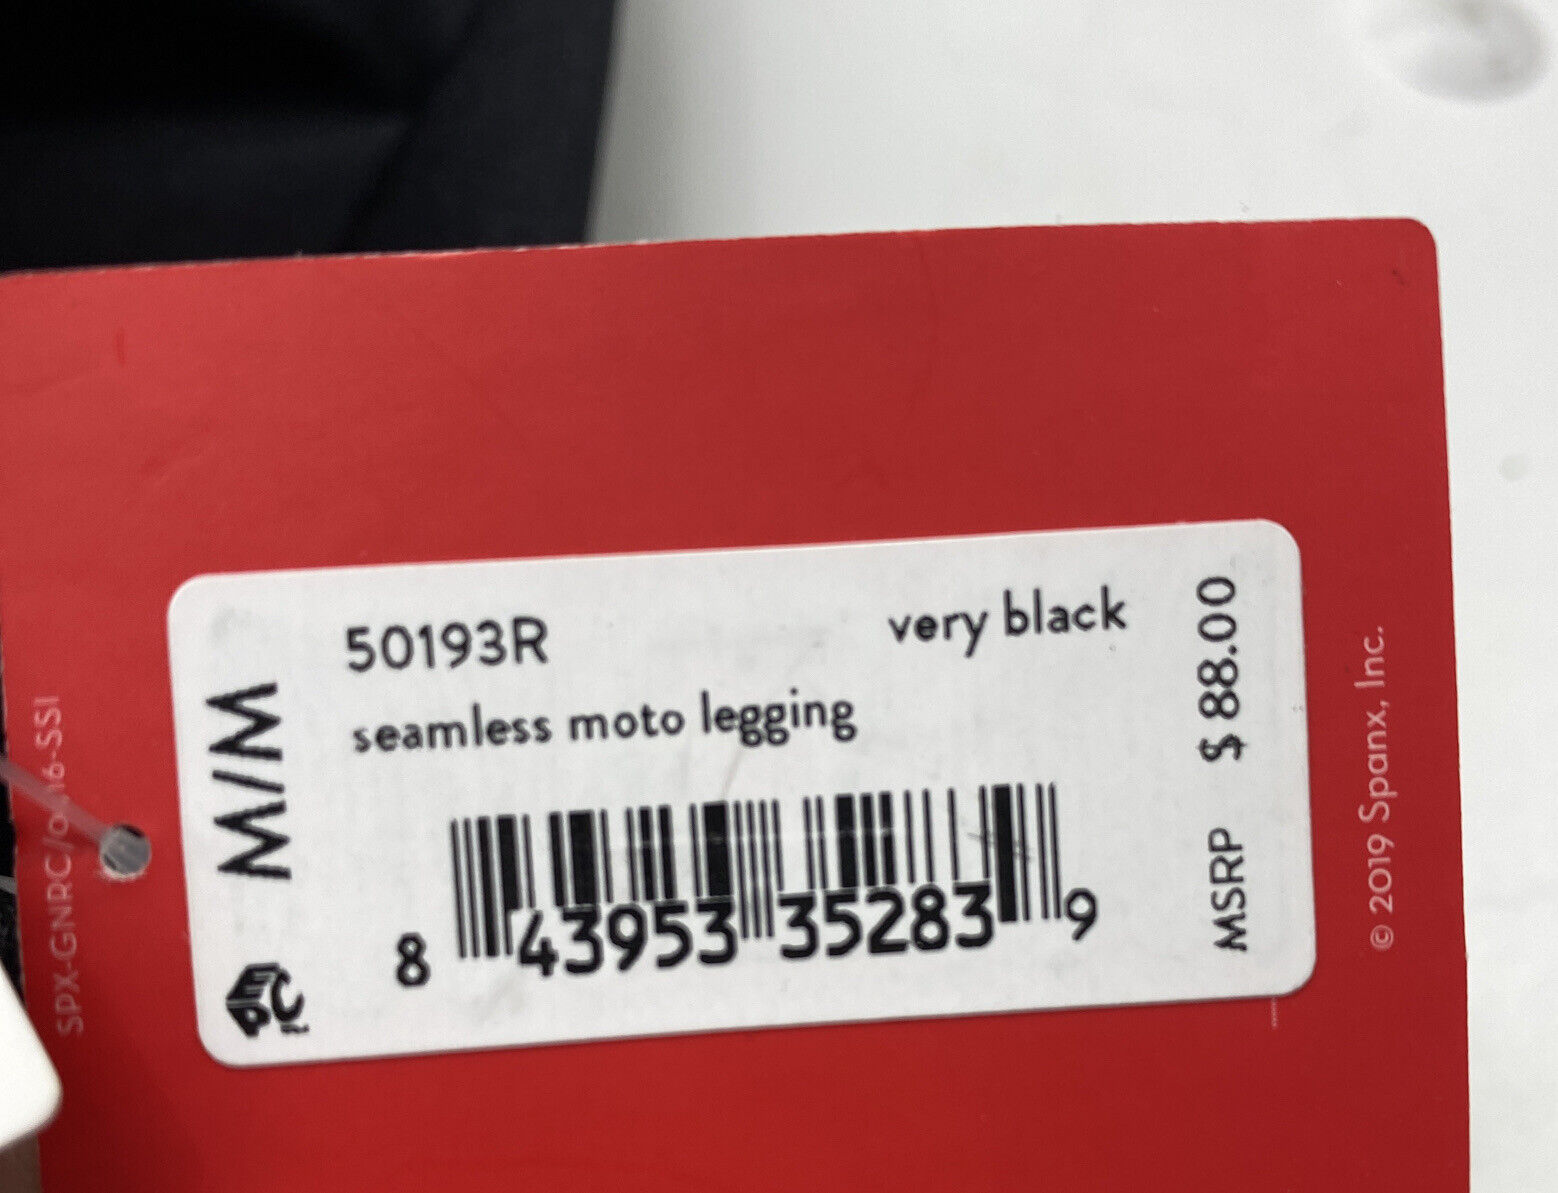 Spanx Seamless Moto Leggings 50193R Very Black Womens Size Medium